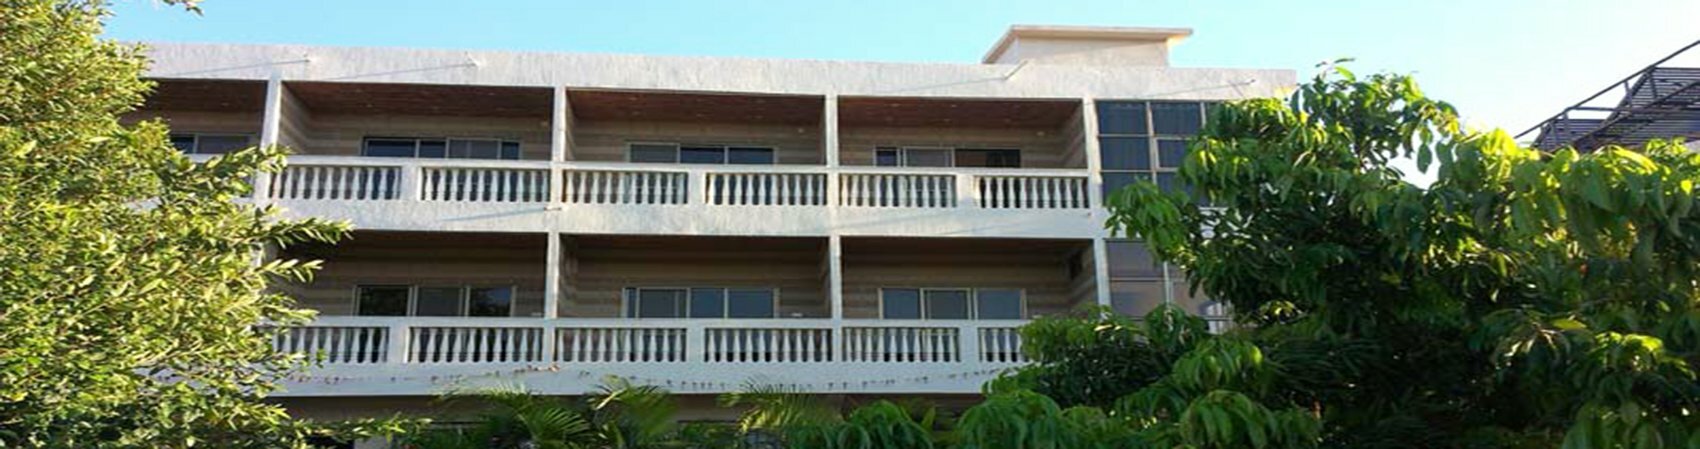 Hotels in mahabaleshwar